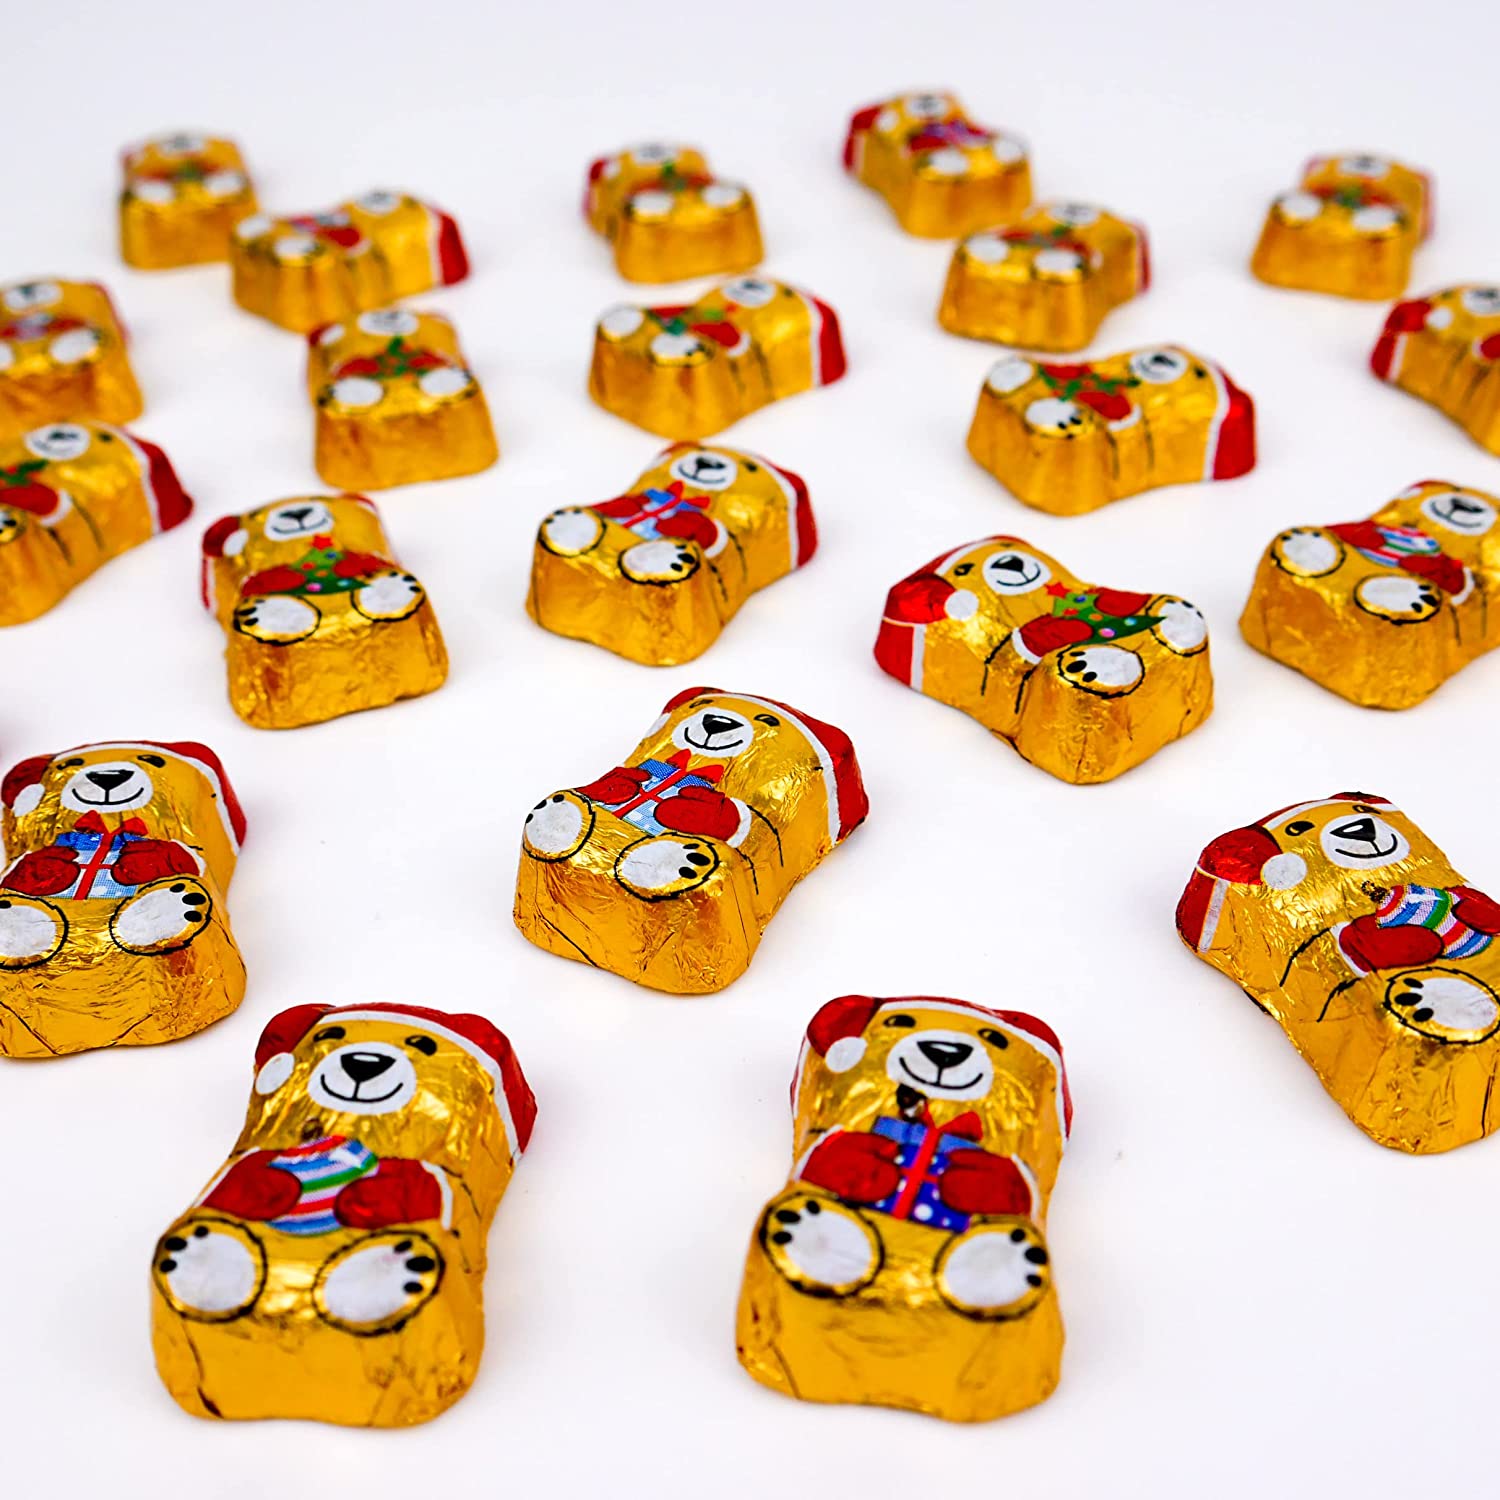 15 Chocolate Creme Filled Bears